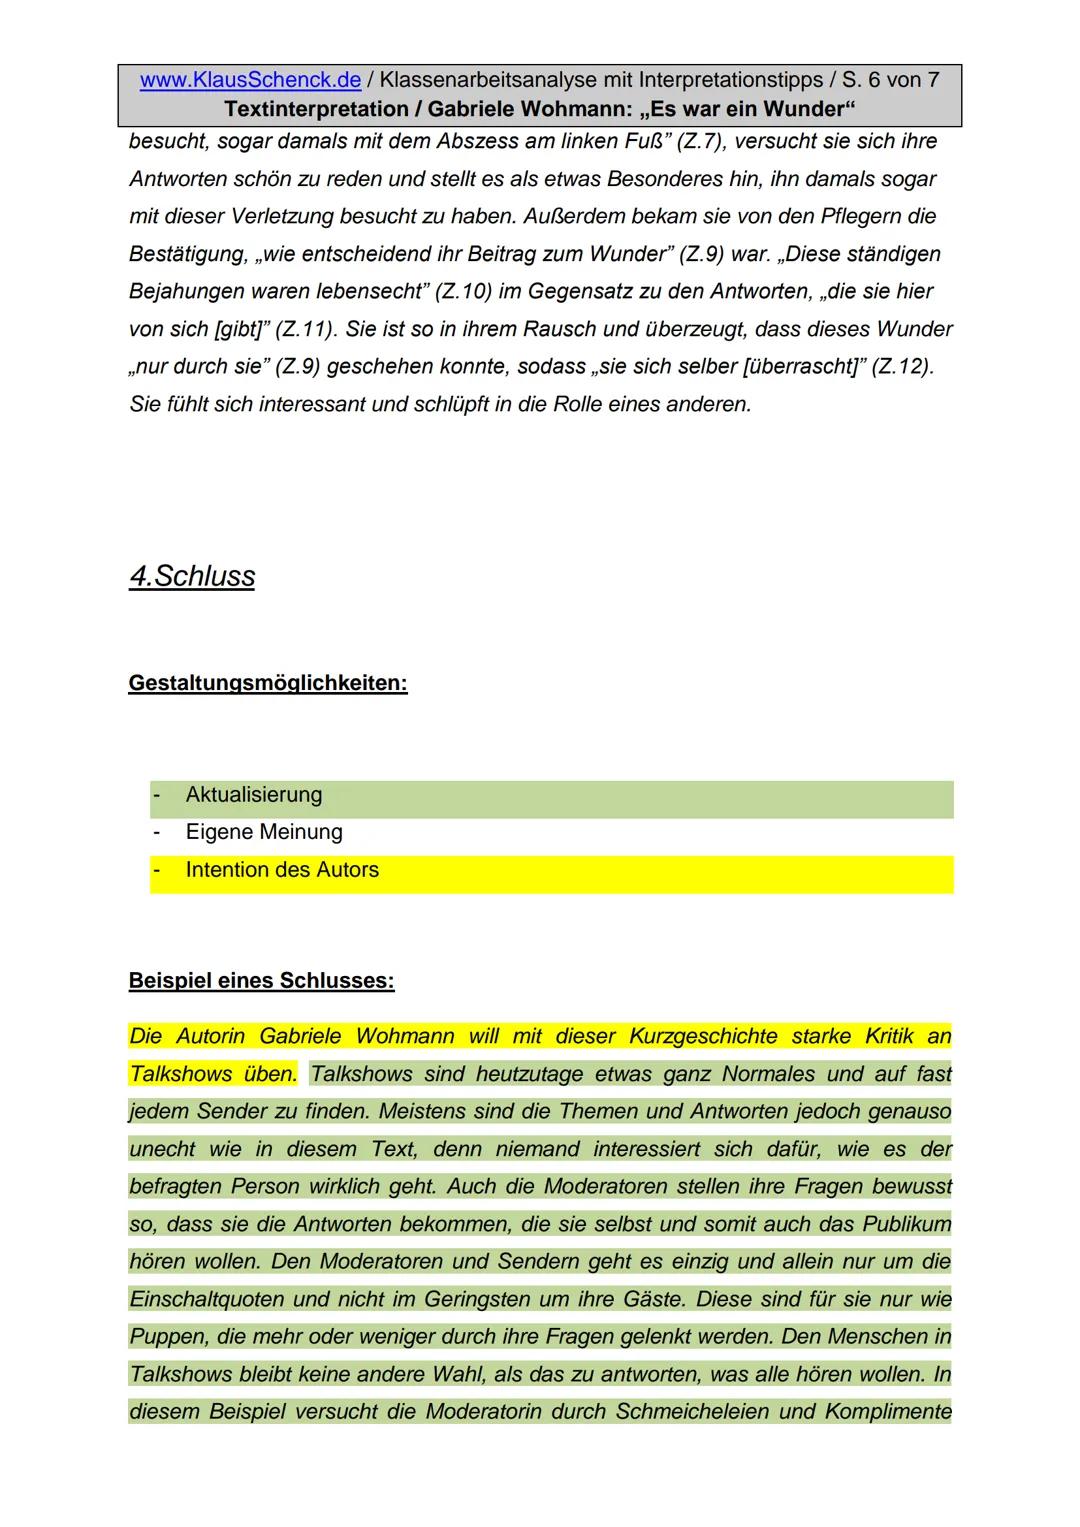 www.KlausSchenck.de / Deutsch-Abi-Training: Textinterpretation / S. 1
Textinterpretation / Prosa (Aufgabe II)
Hm, Textinterpretation, mal ga